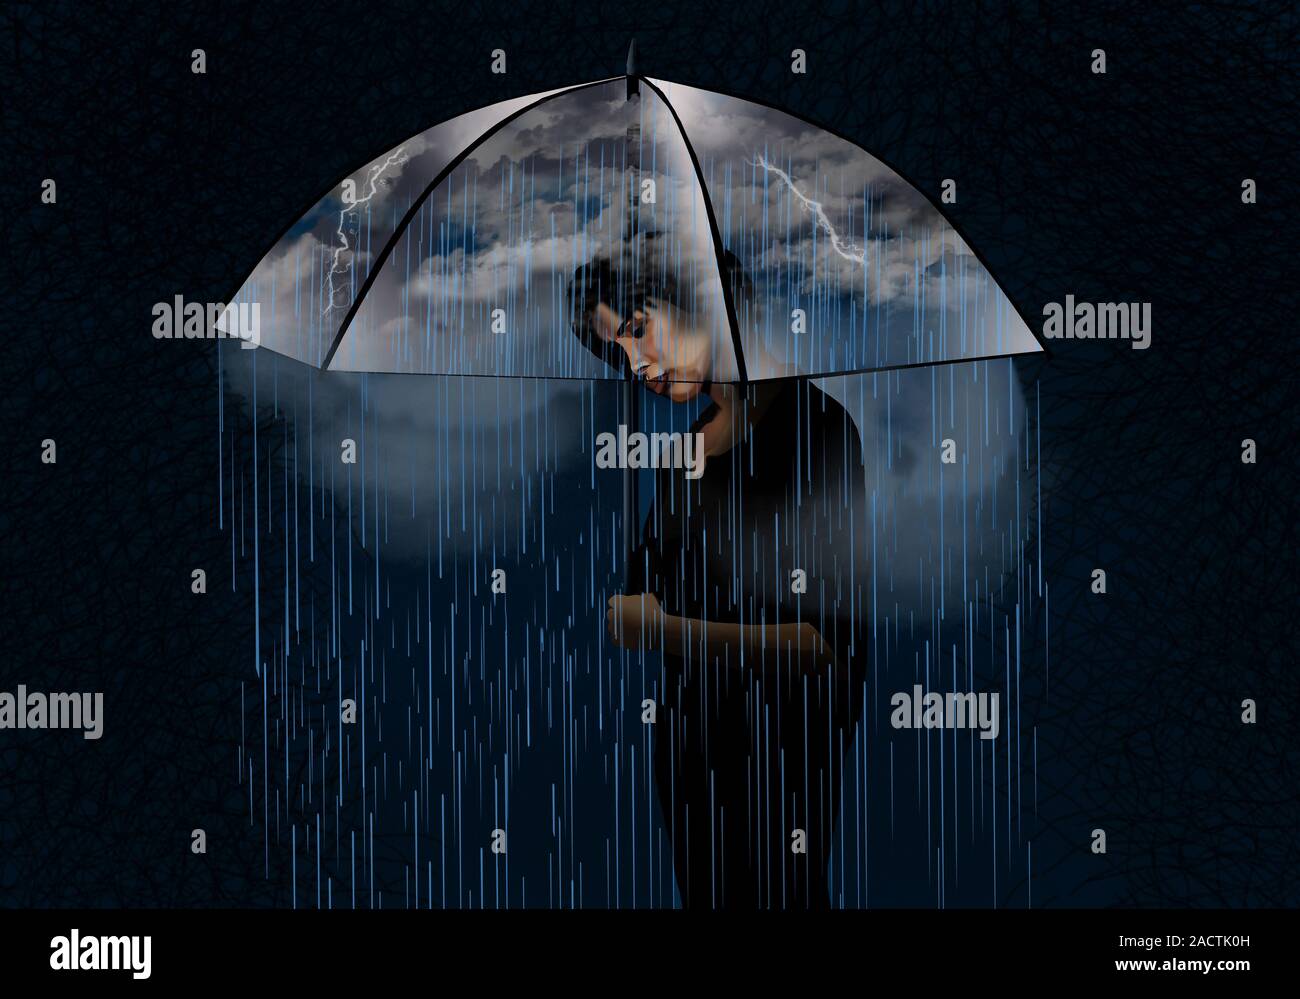 Woman under umbrella with rain and lightning storm Stock Photo